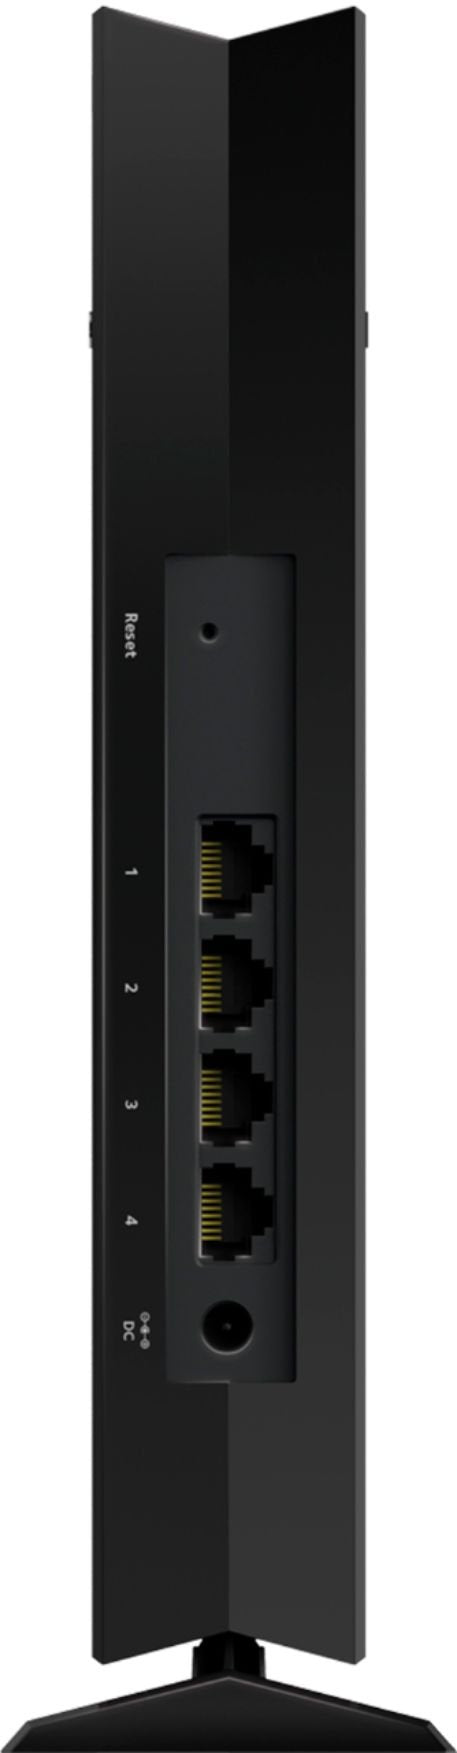 NETGEAR EAX20 AX1800 WIFI 6 Mesh Desktop Range Extender and Signal Booster Black (Certified Refurbished)